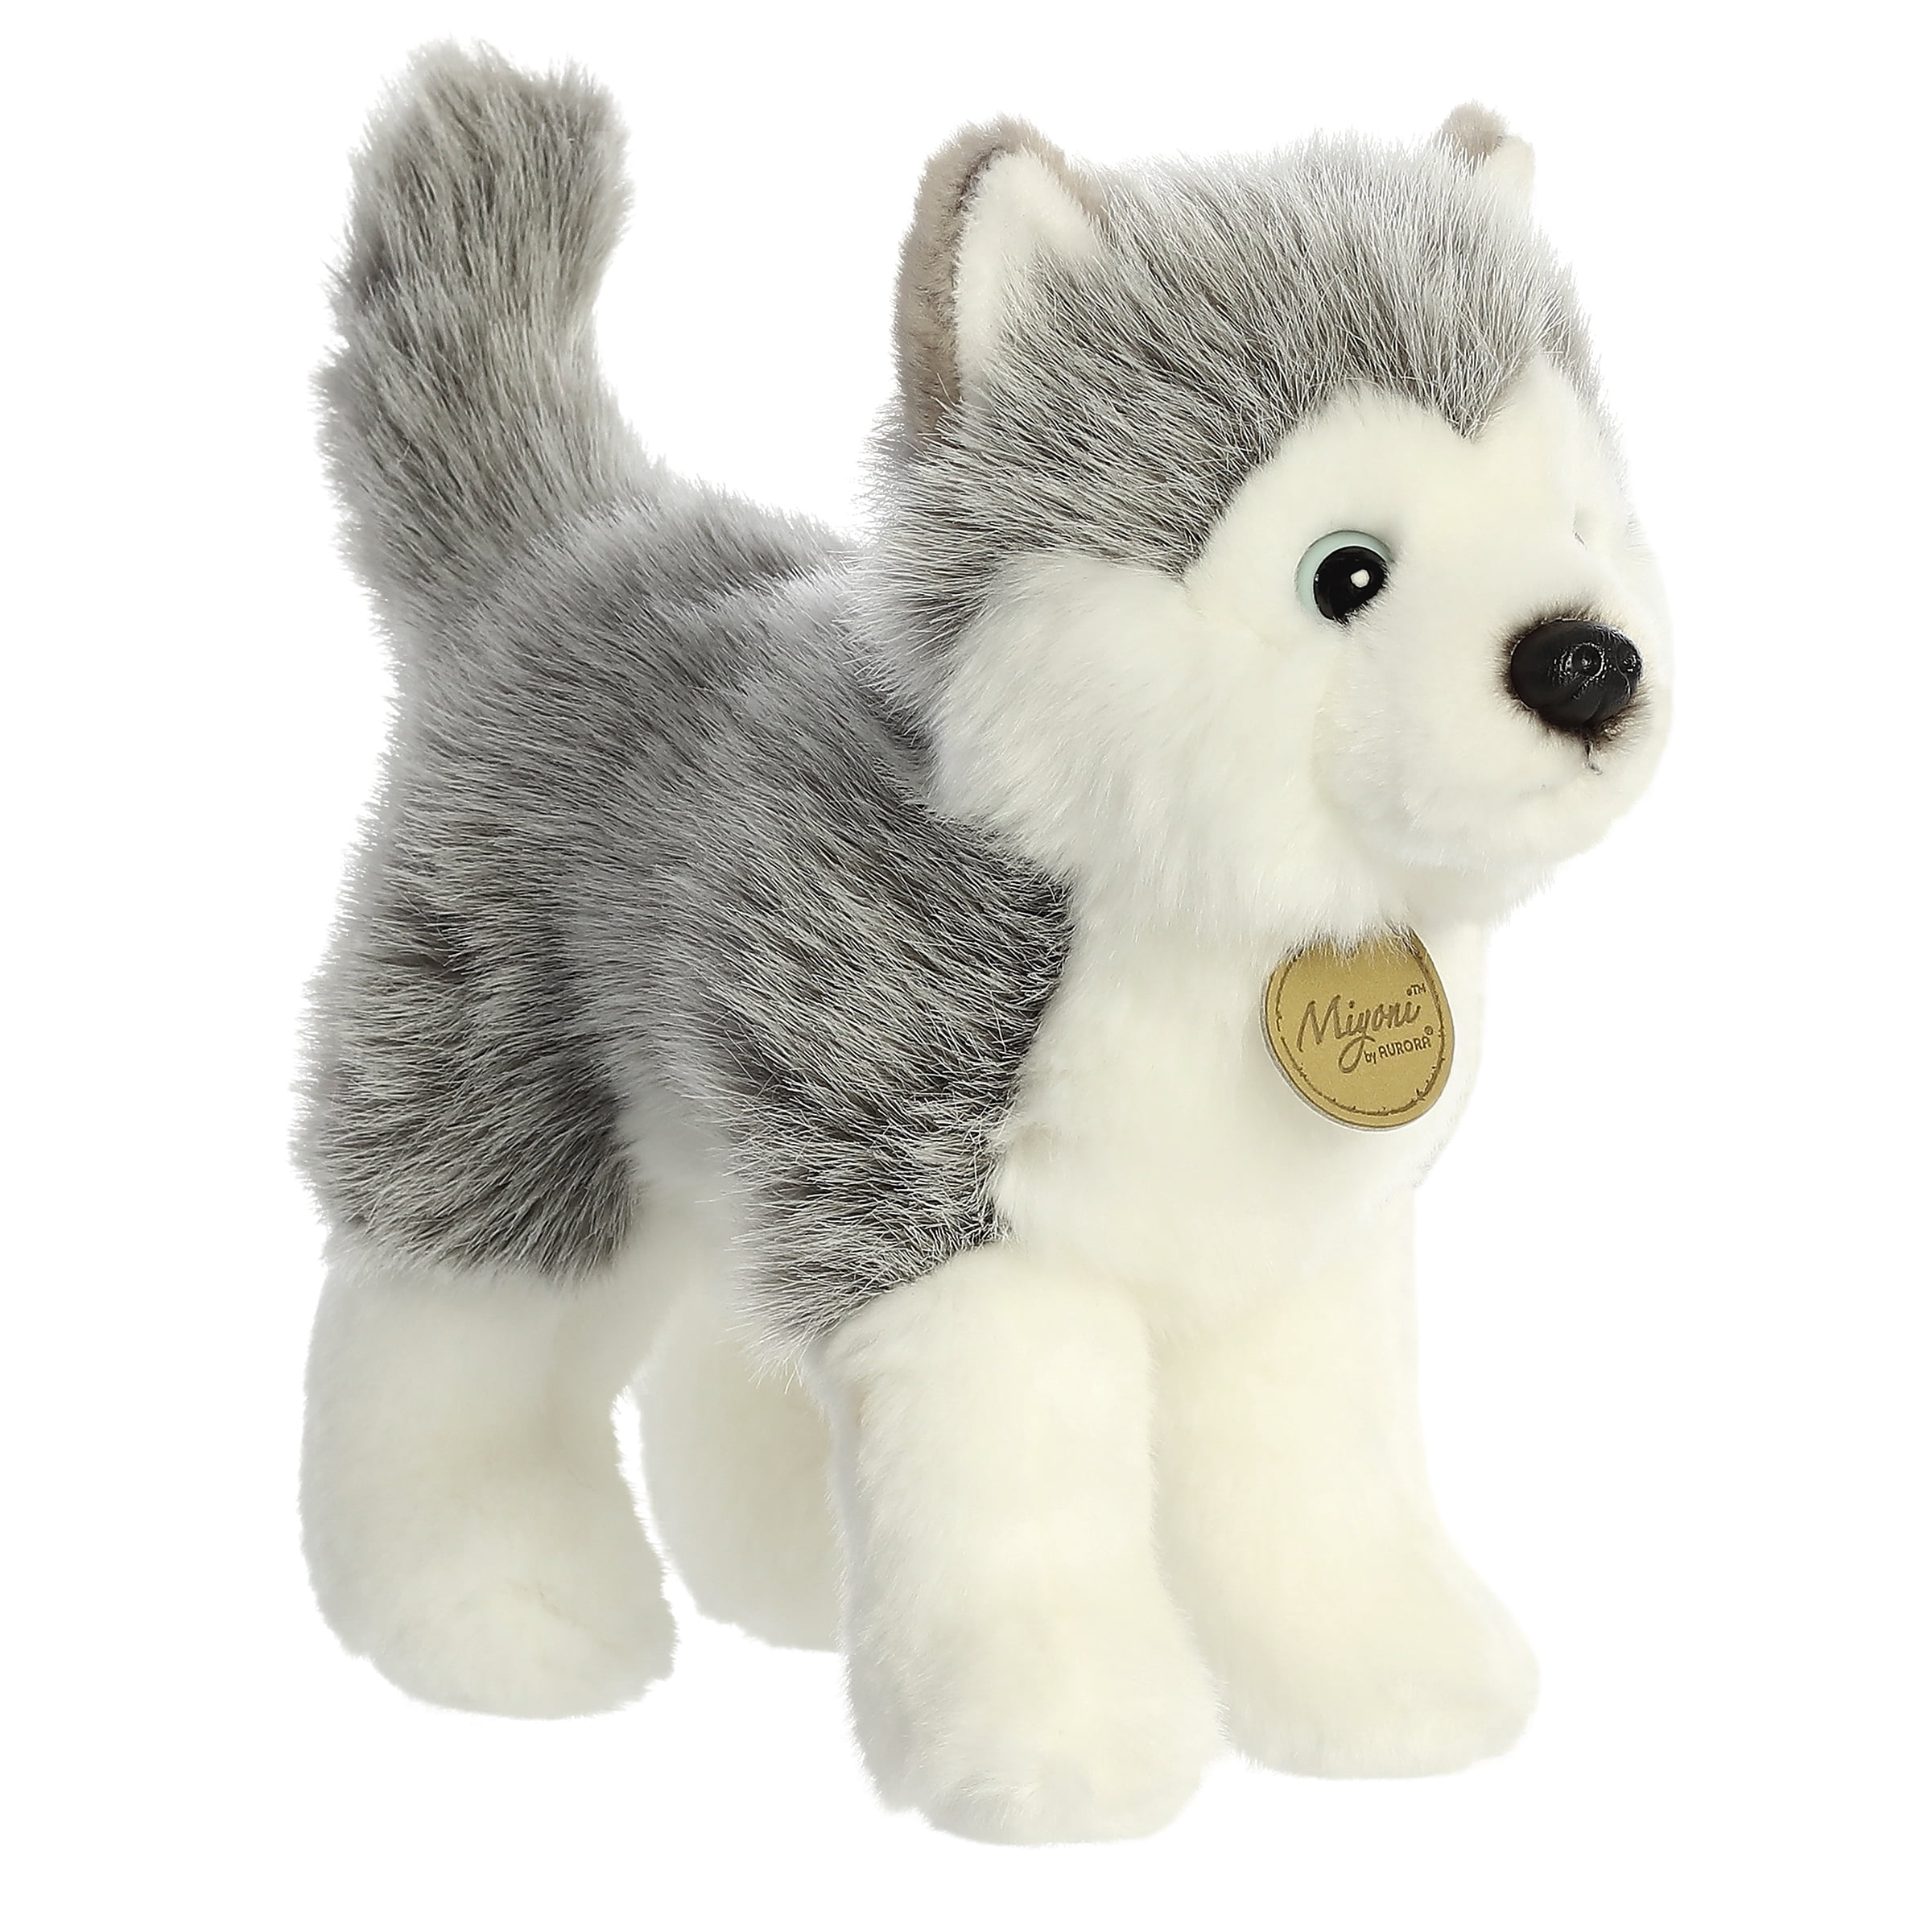 12 Inch Flopsie Shadow Husky Dog Plush Stuffed Animal by Aurora for sale online 